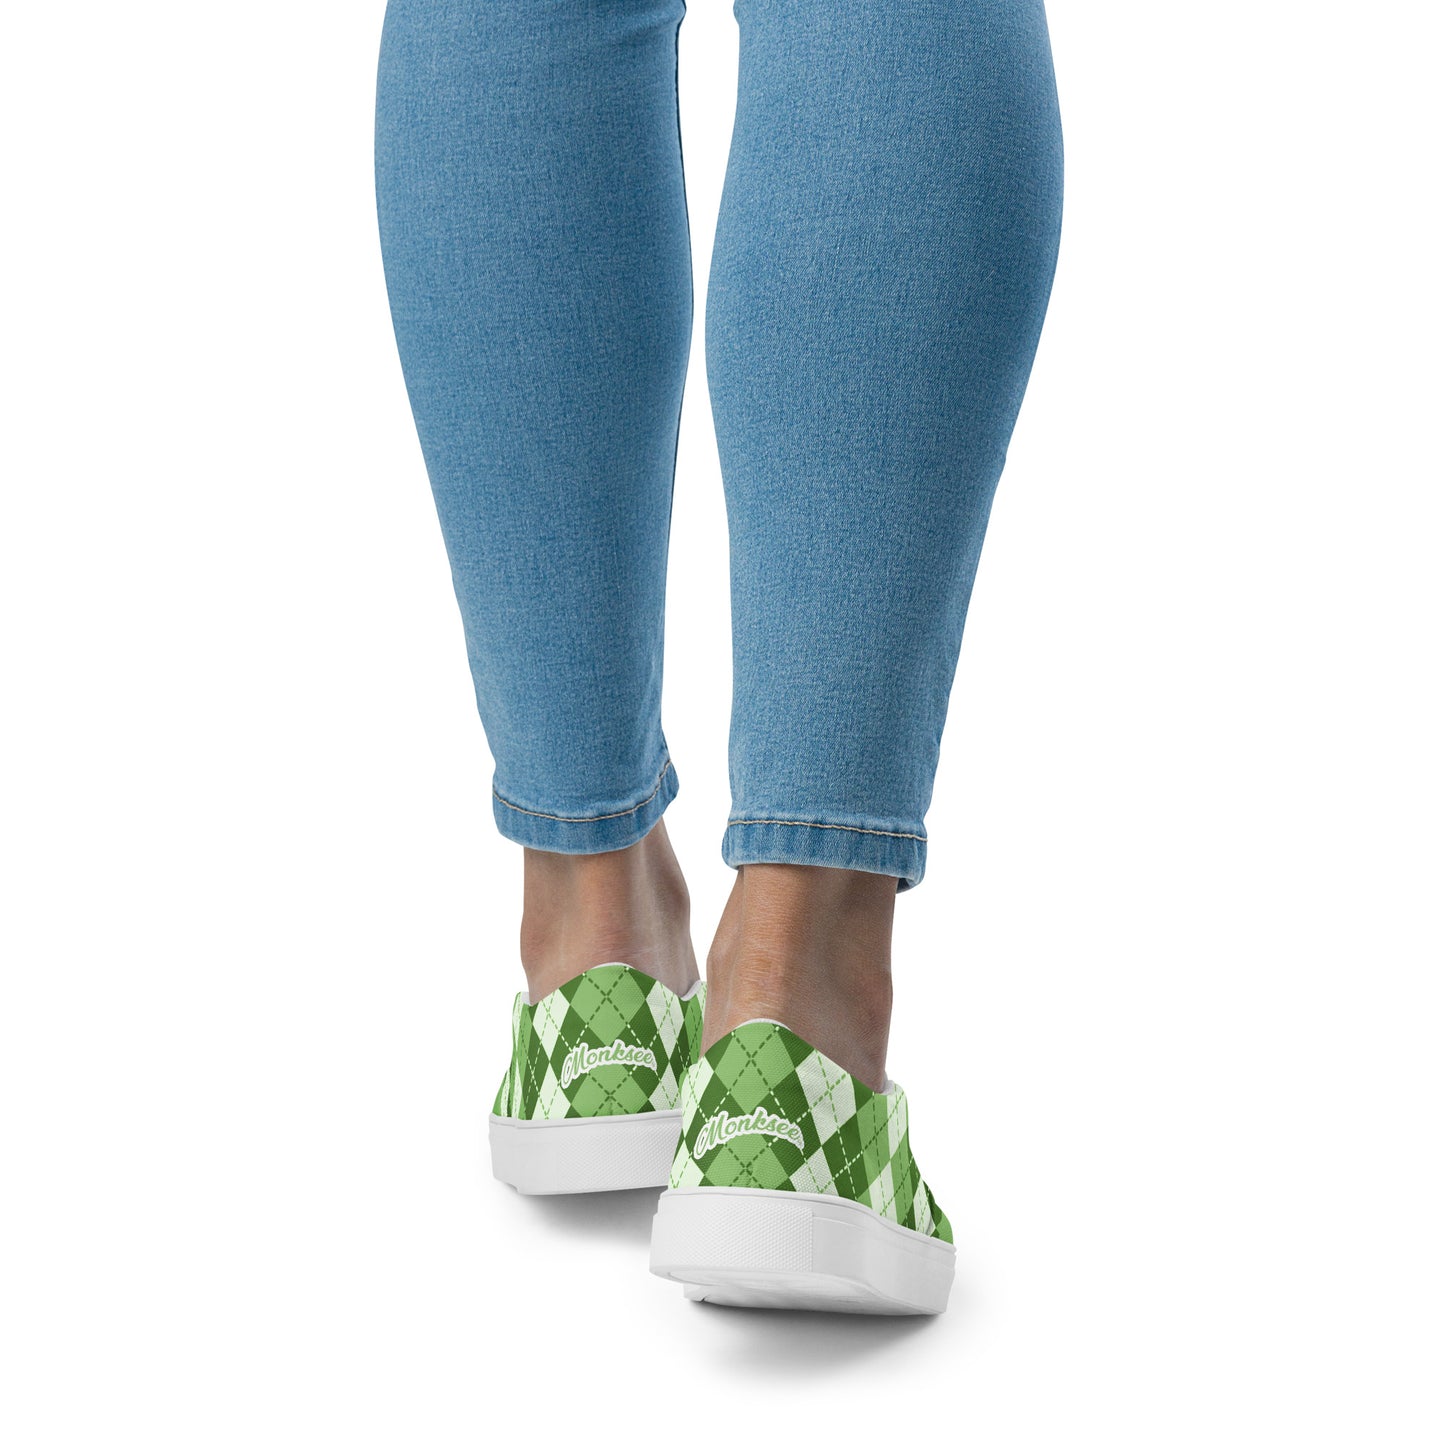 Lady Monksee - slip-on shoes (pistachio)